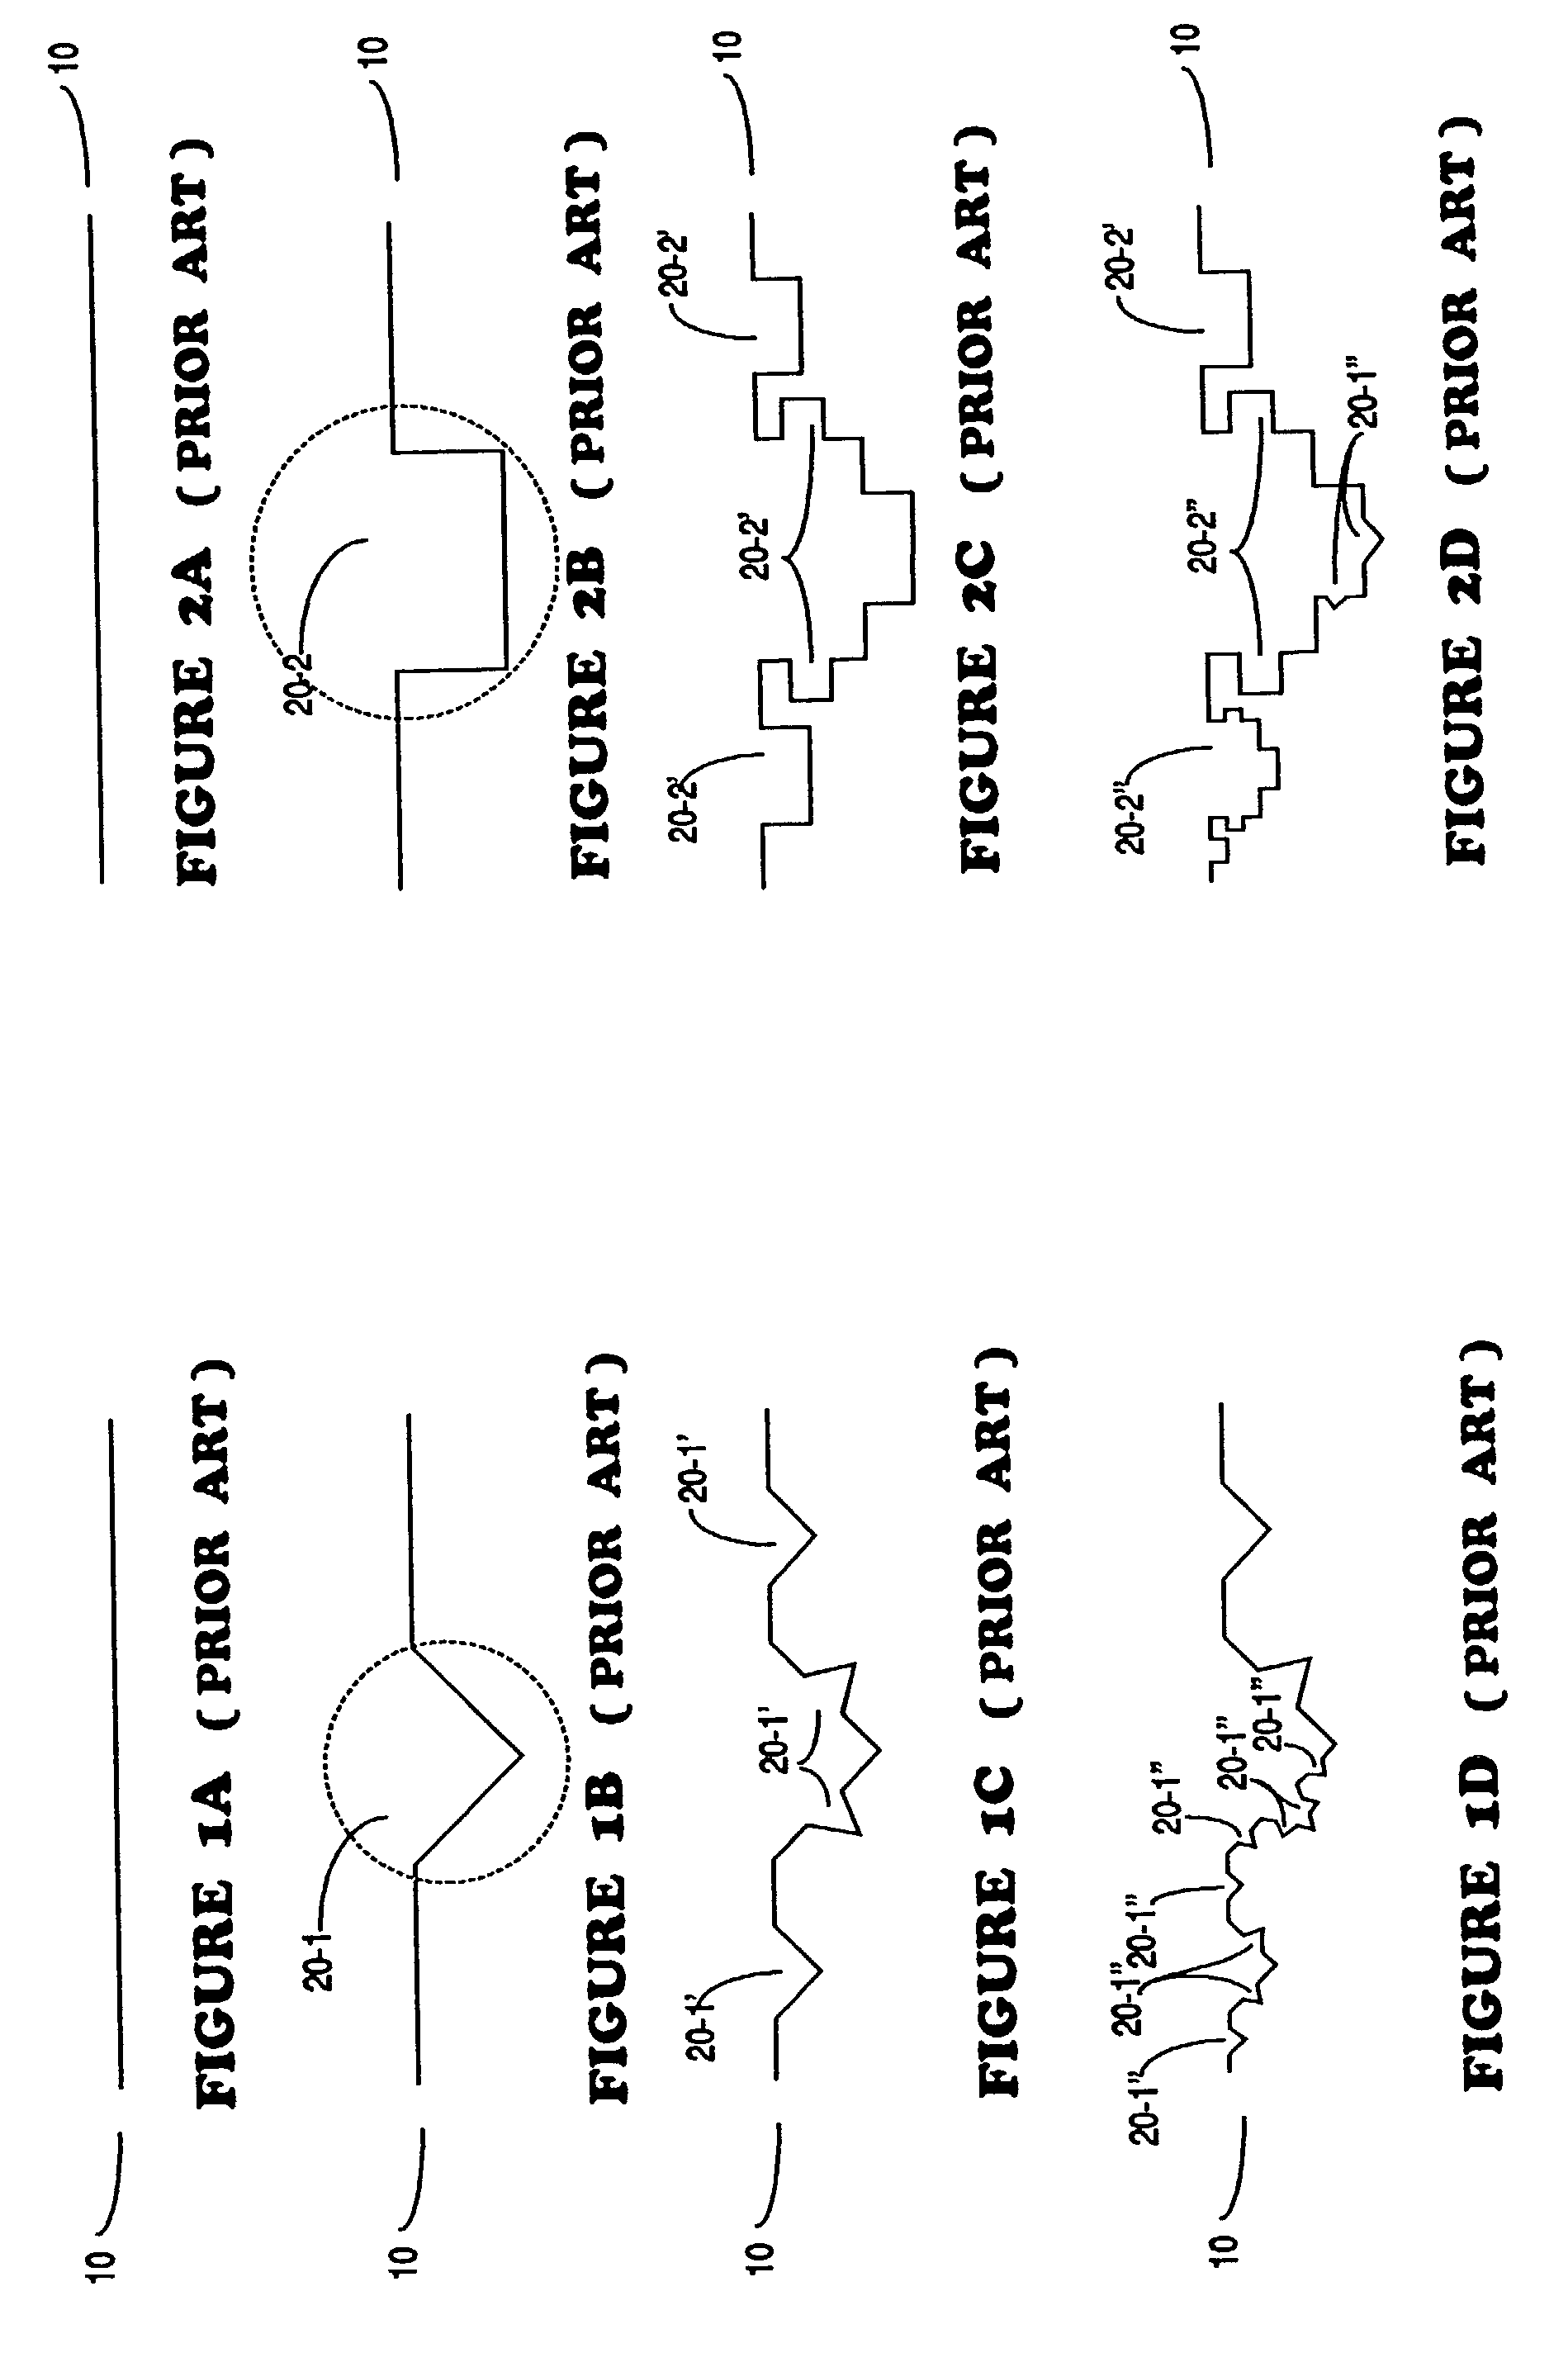 Fractal antennas and fractal resonators